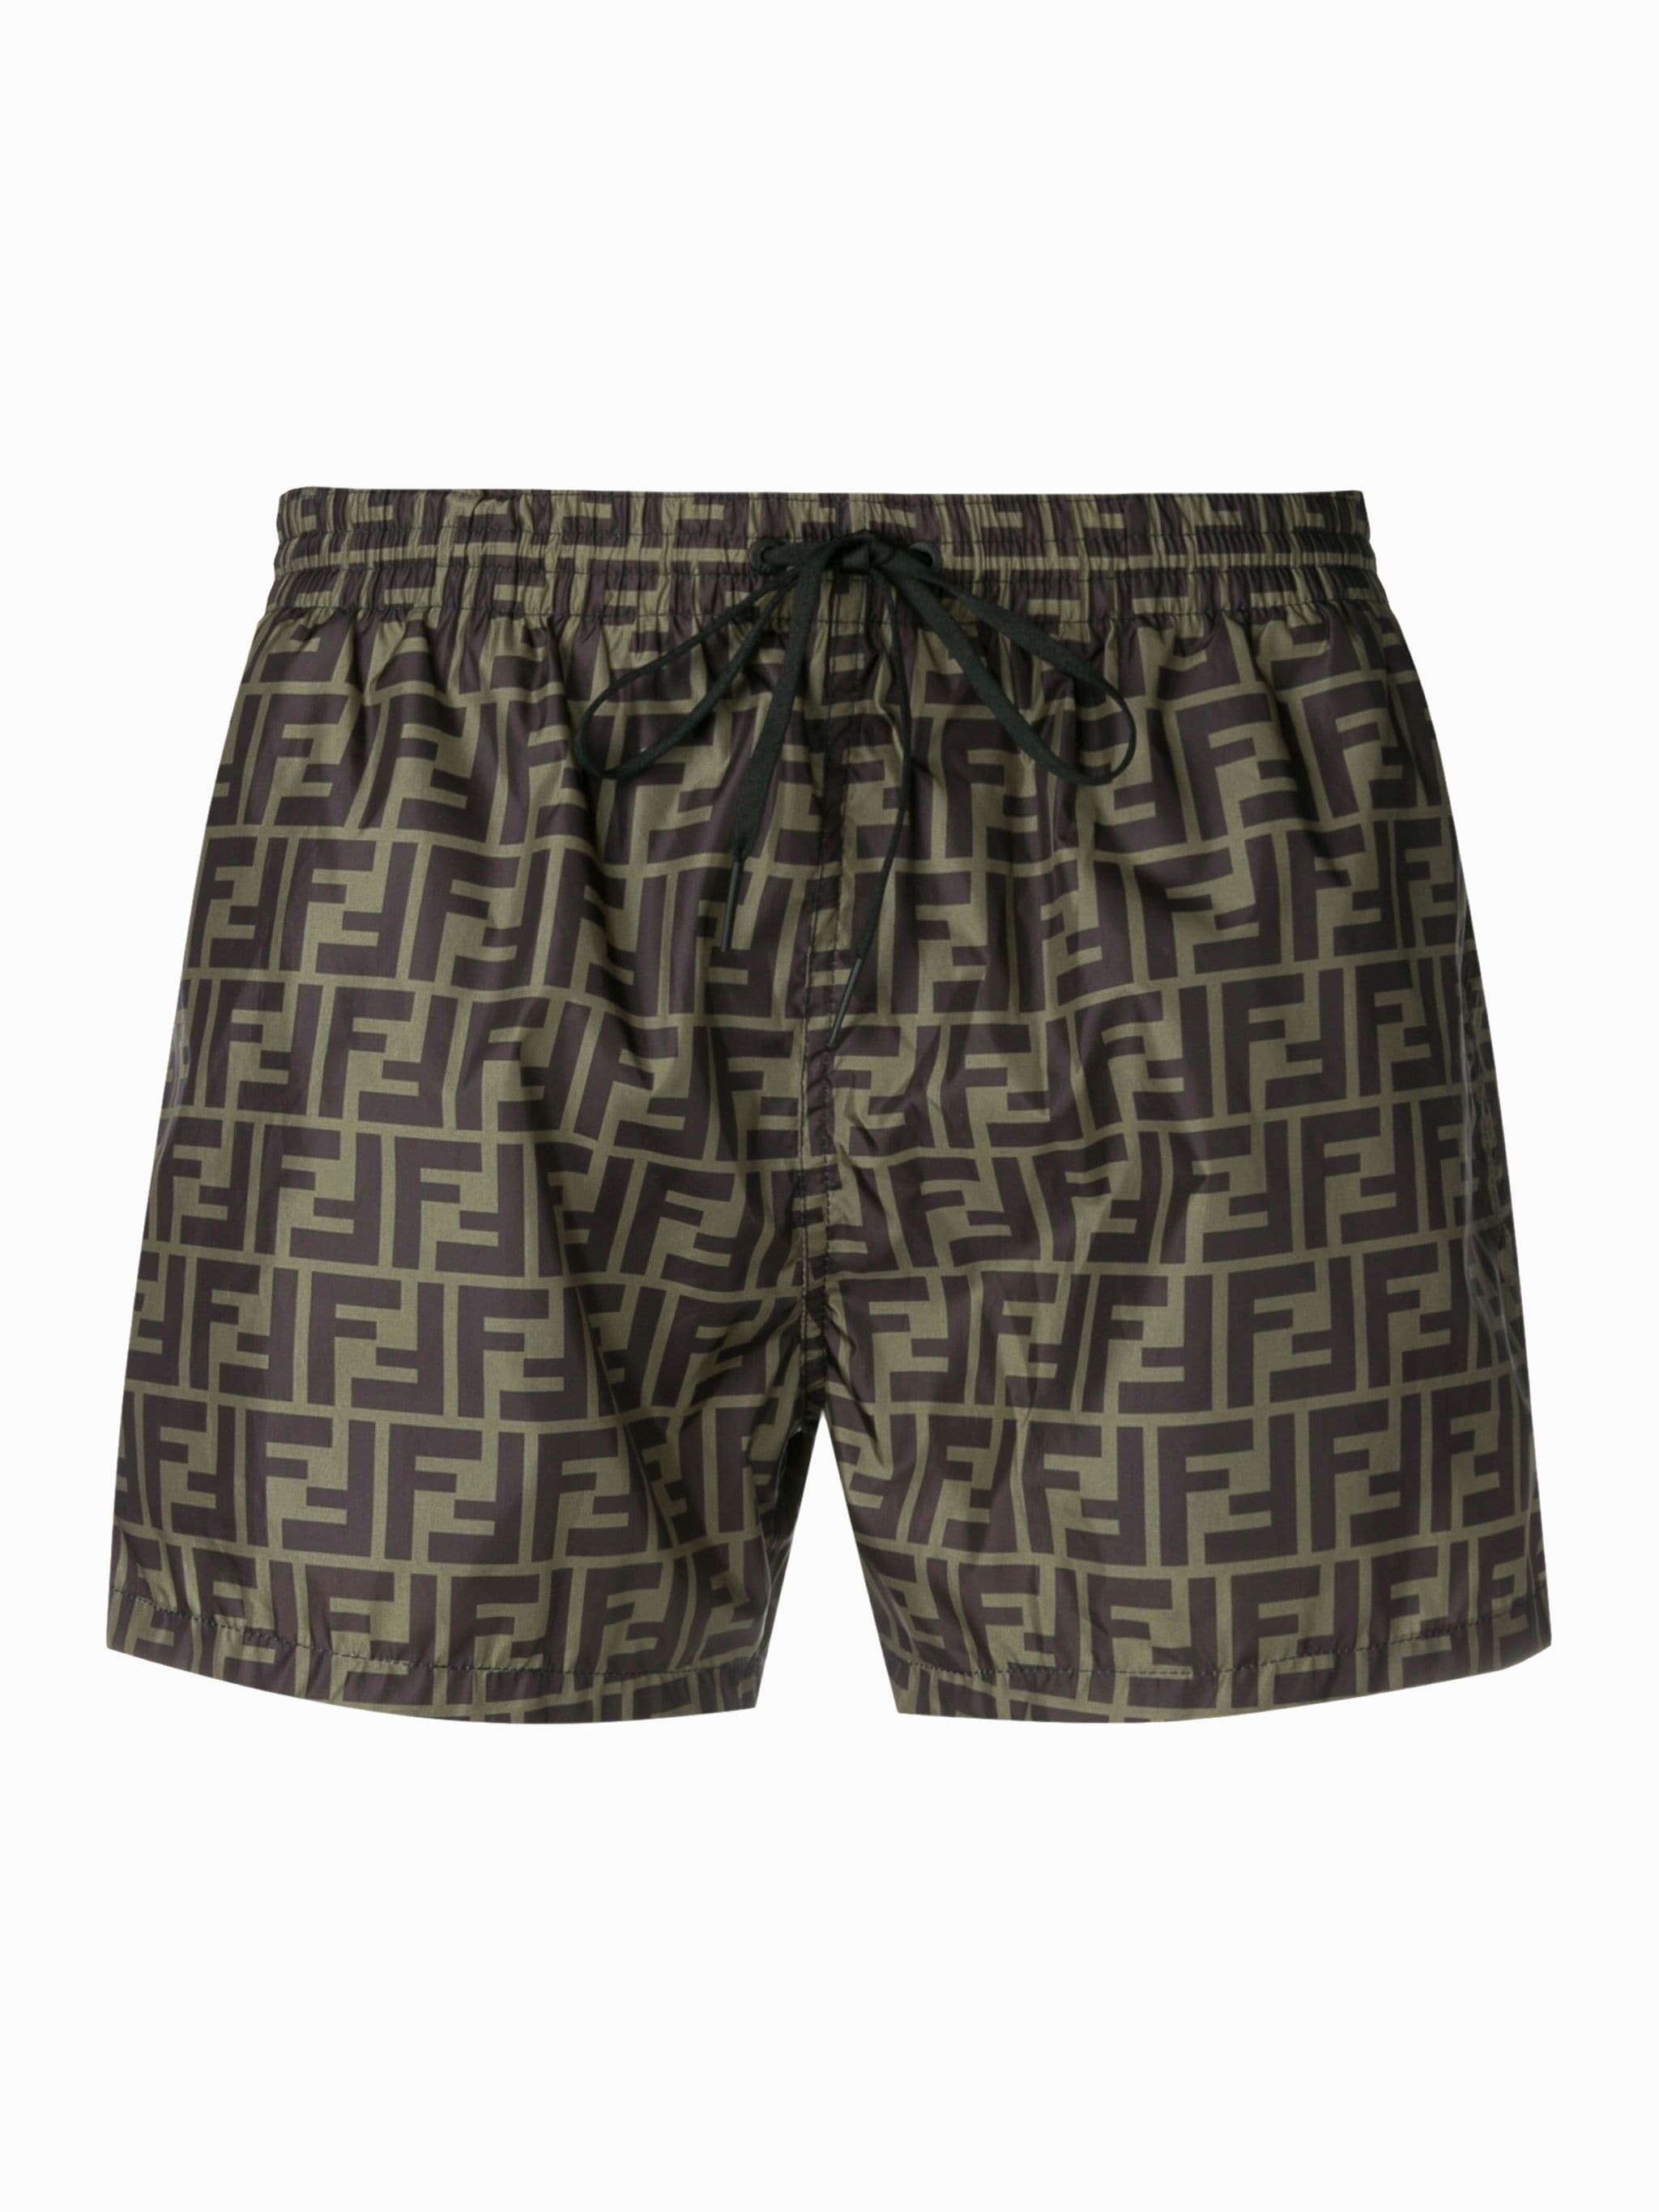 FF motif swim shorts - 3